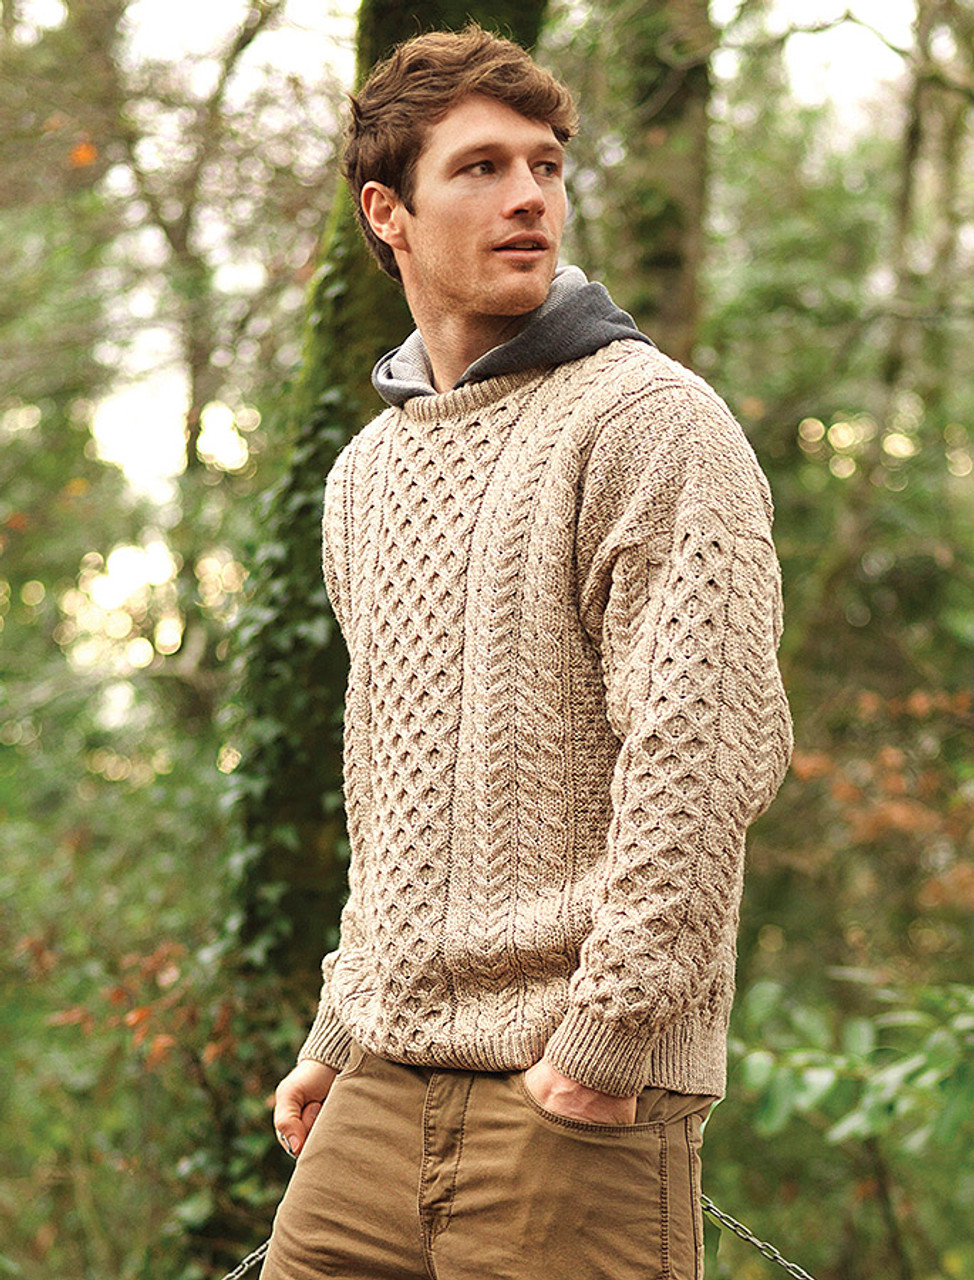 Kids merino wool sweater - Collection Merino 100% merino wool - Knitted  clothes at